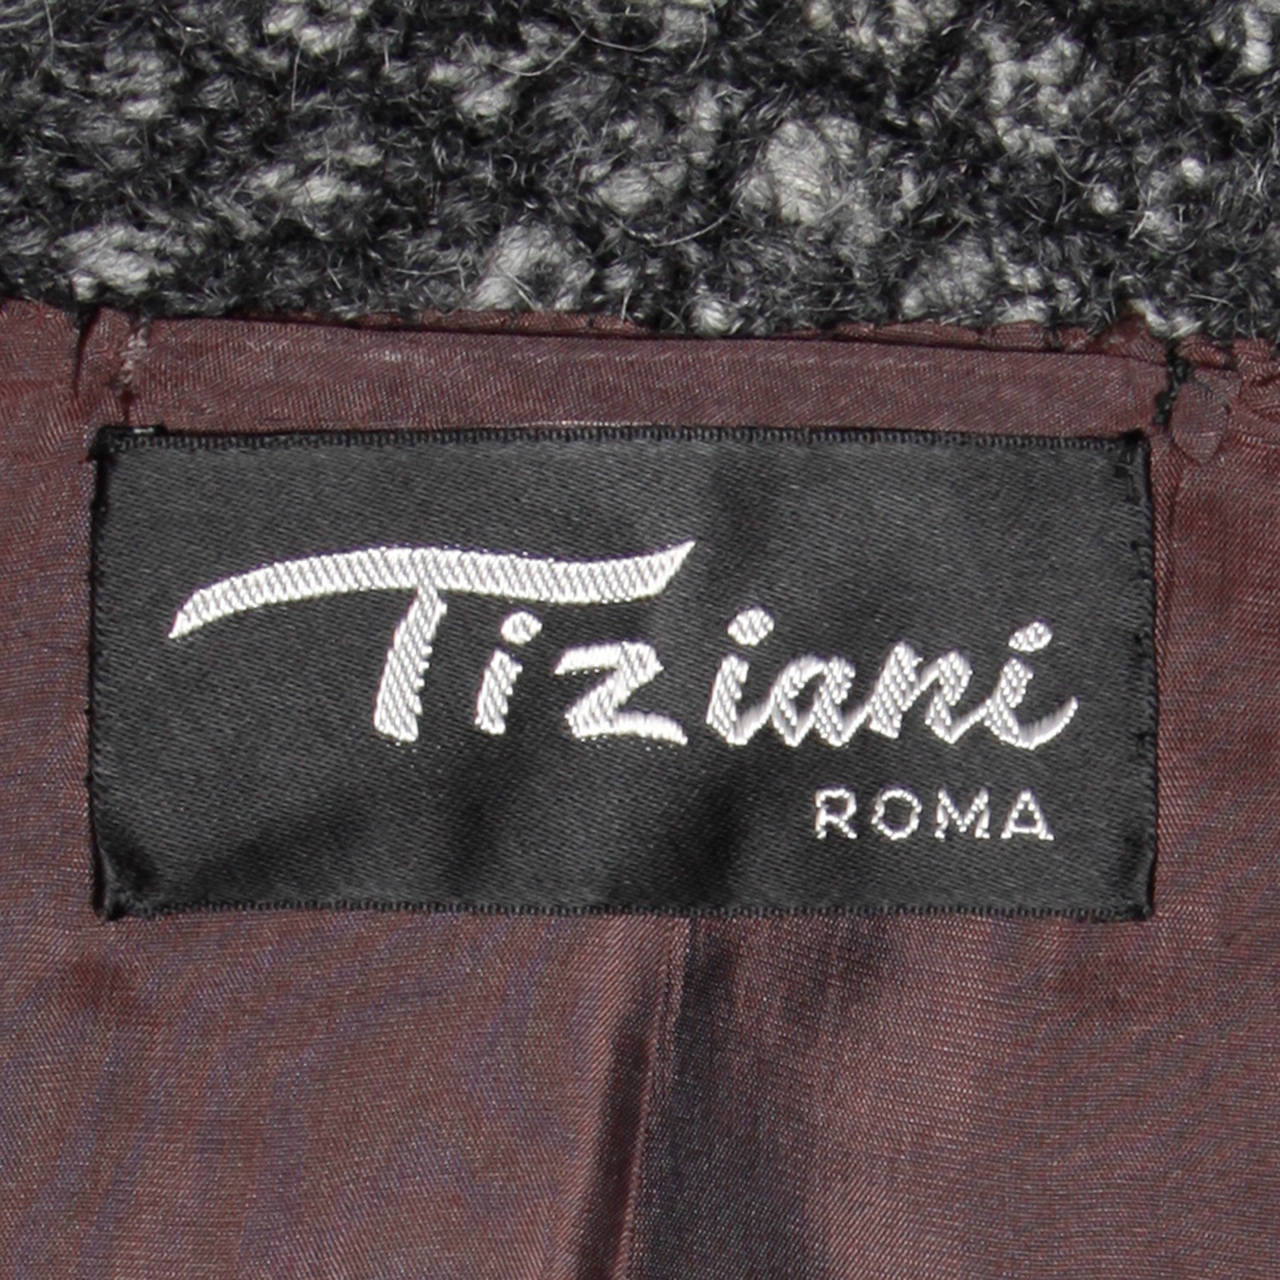 Tiziani 1960s Italian Couture Cashmere Wool 4-Piece Ensemble or Skirt Suit 5